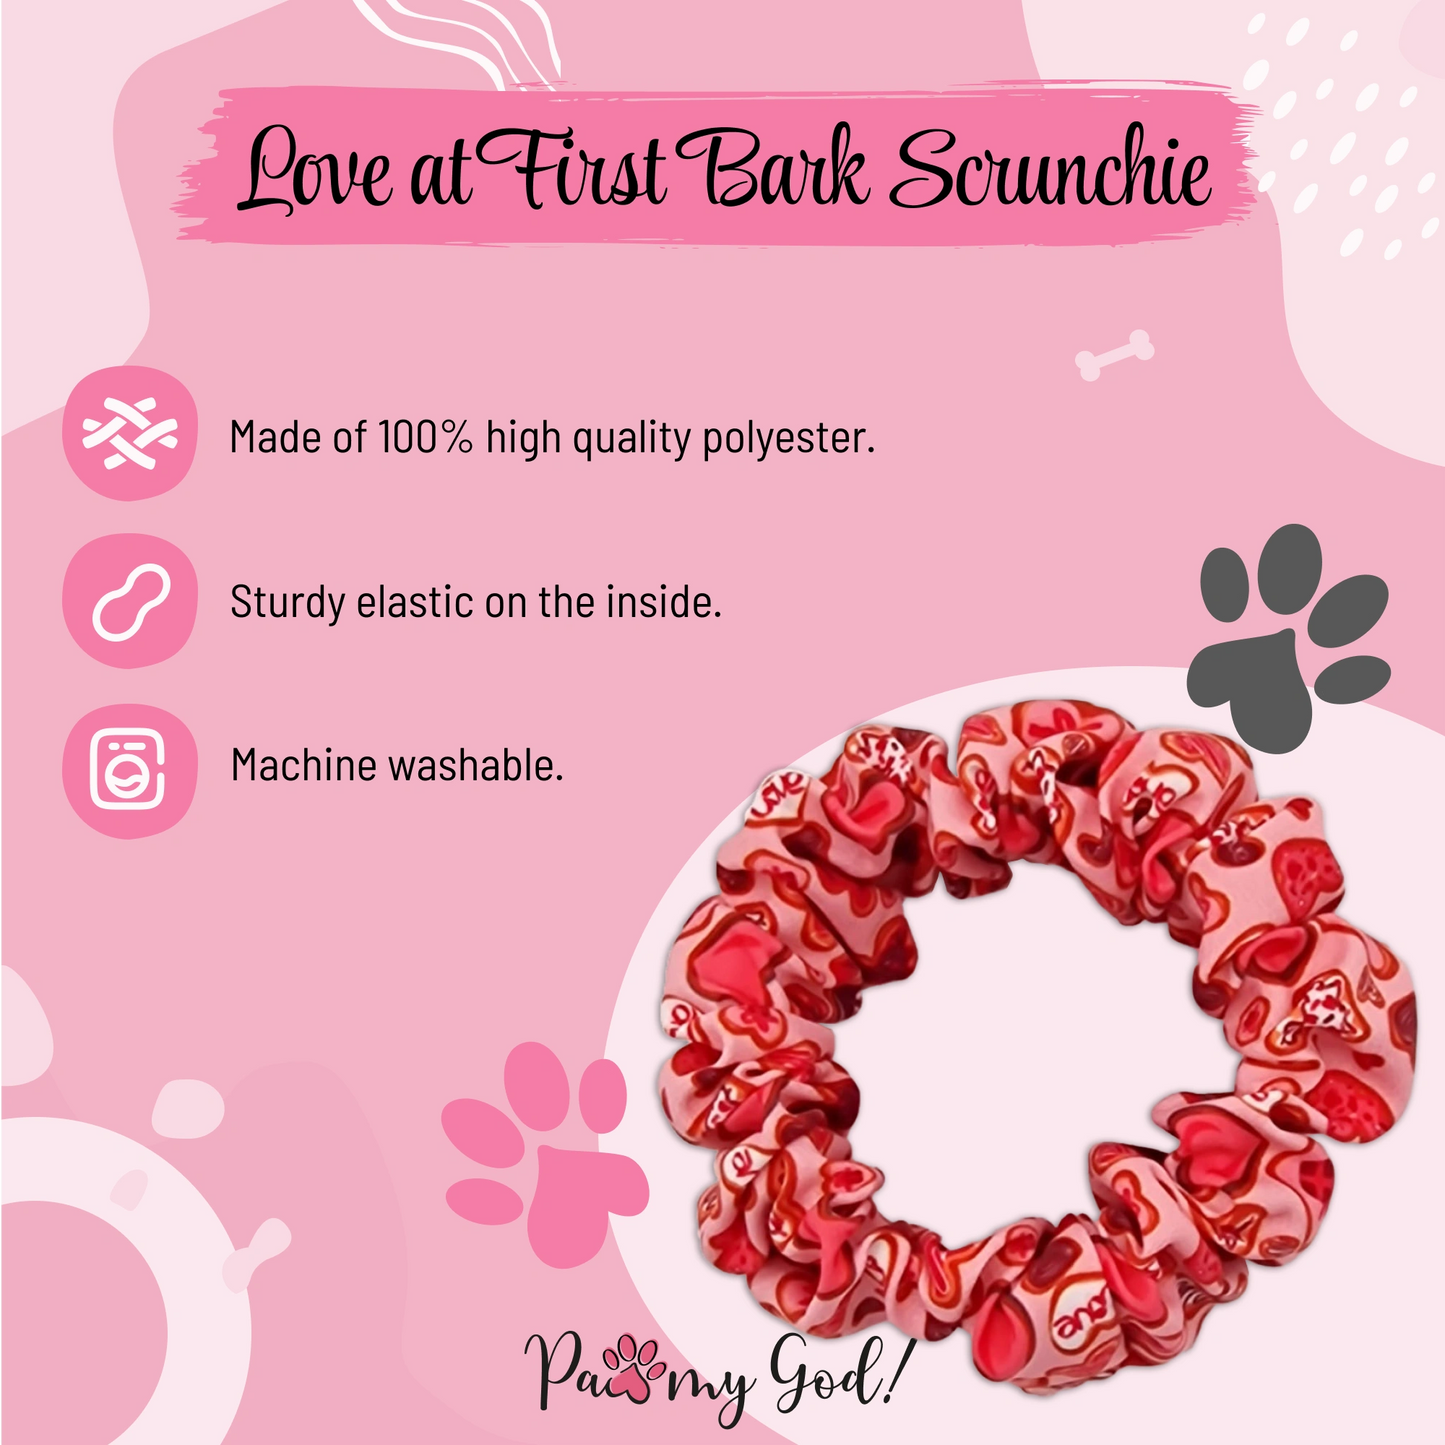 Love at First Bark Scrunchie